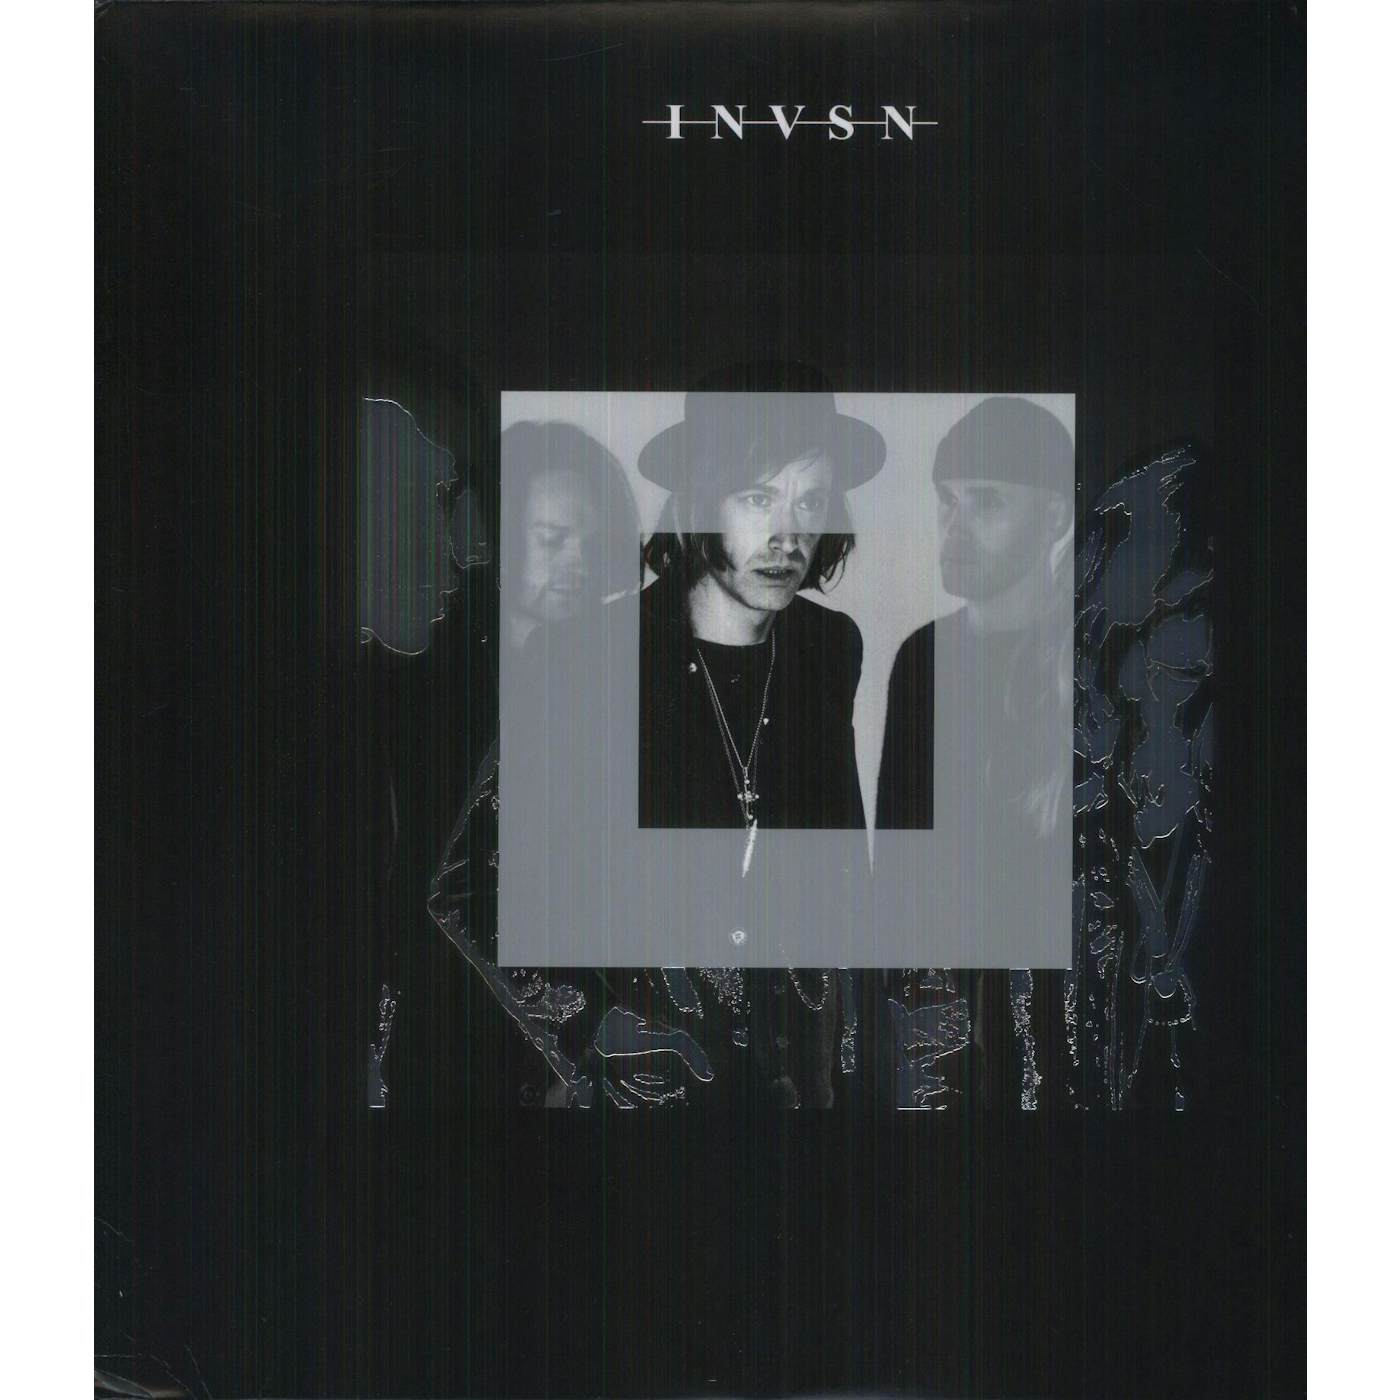 INVSN Vinyl Record - Canada Release